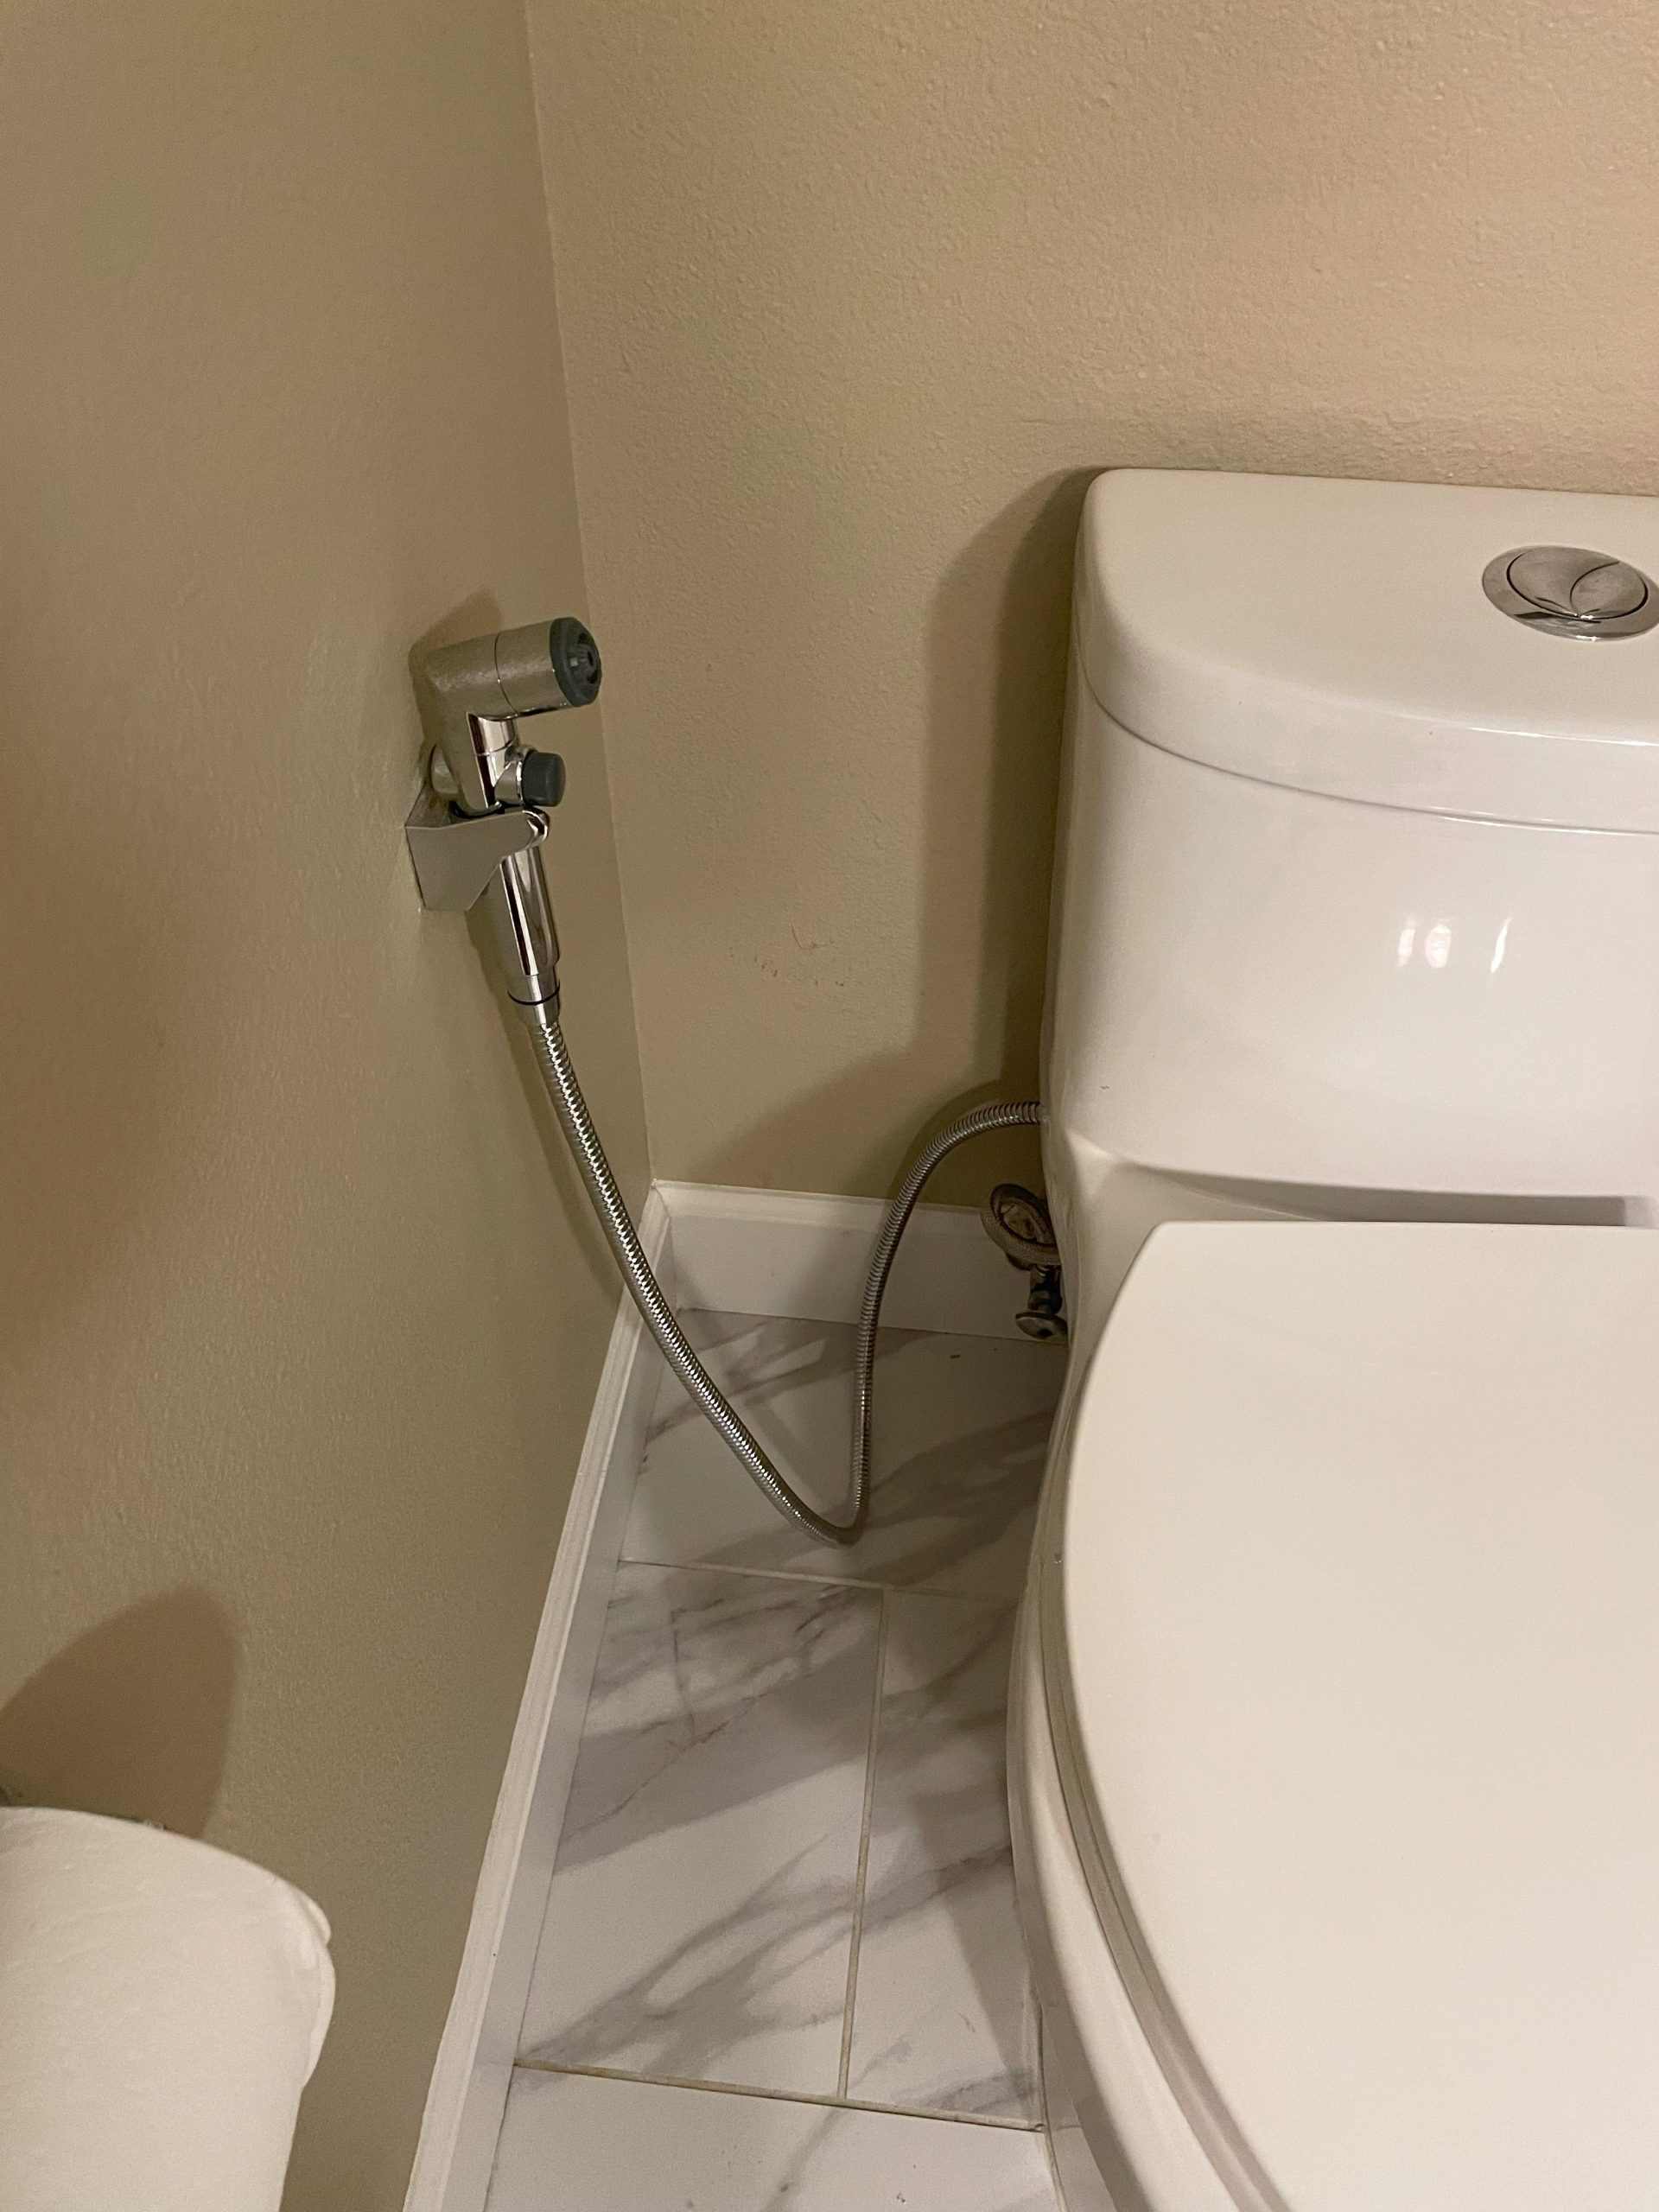 Bidet toilet sprayer installation